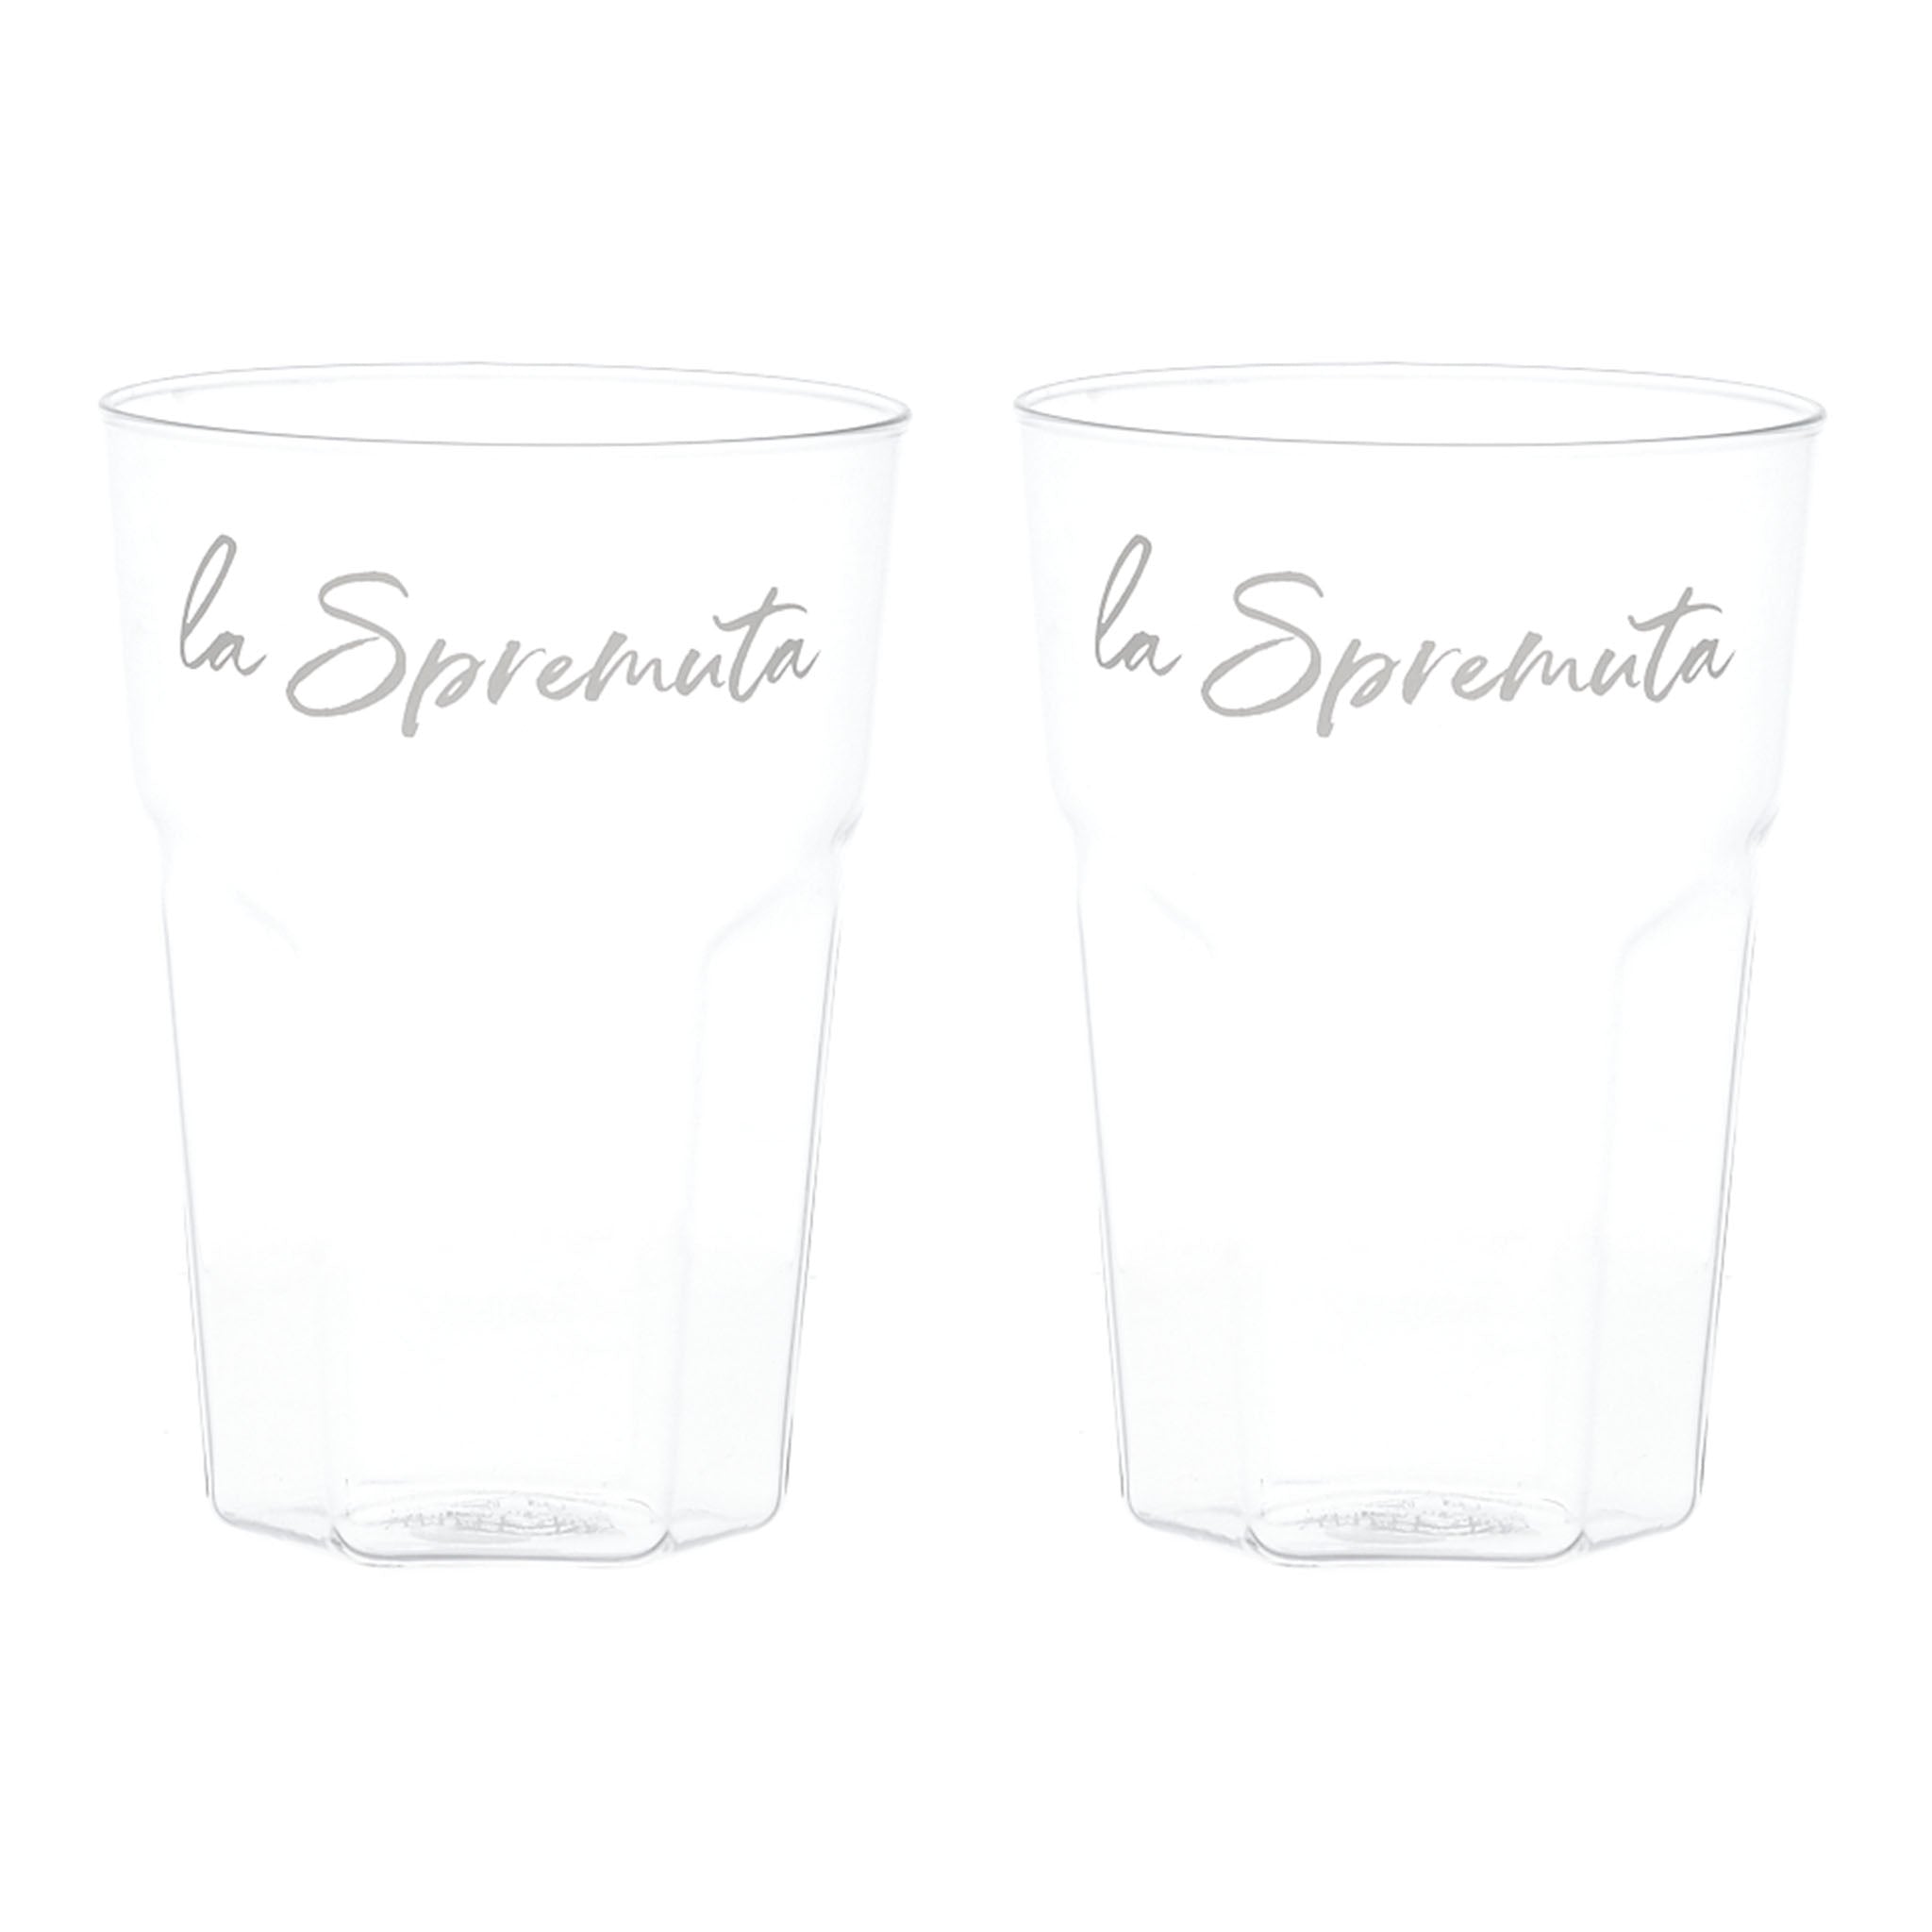 La Spremuta Glass - Set of 2